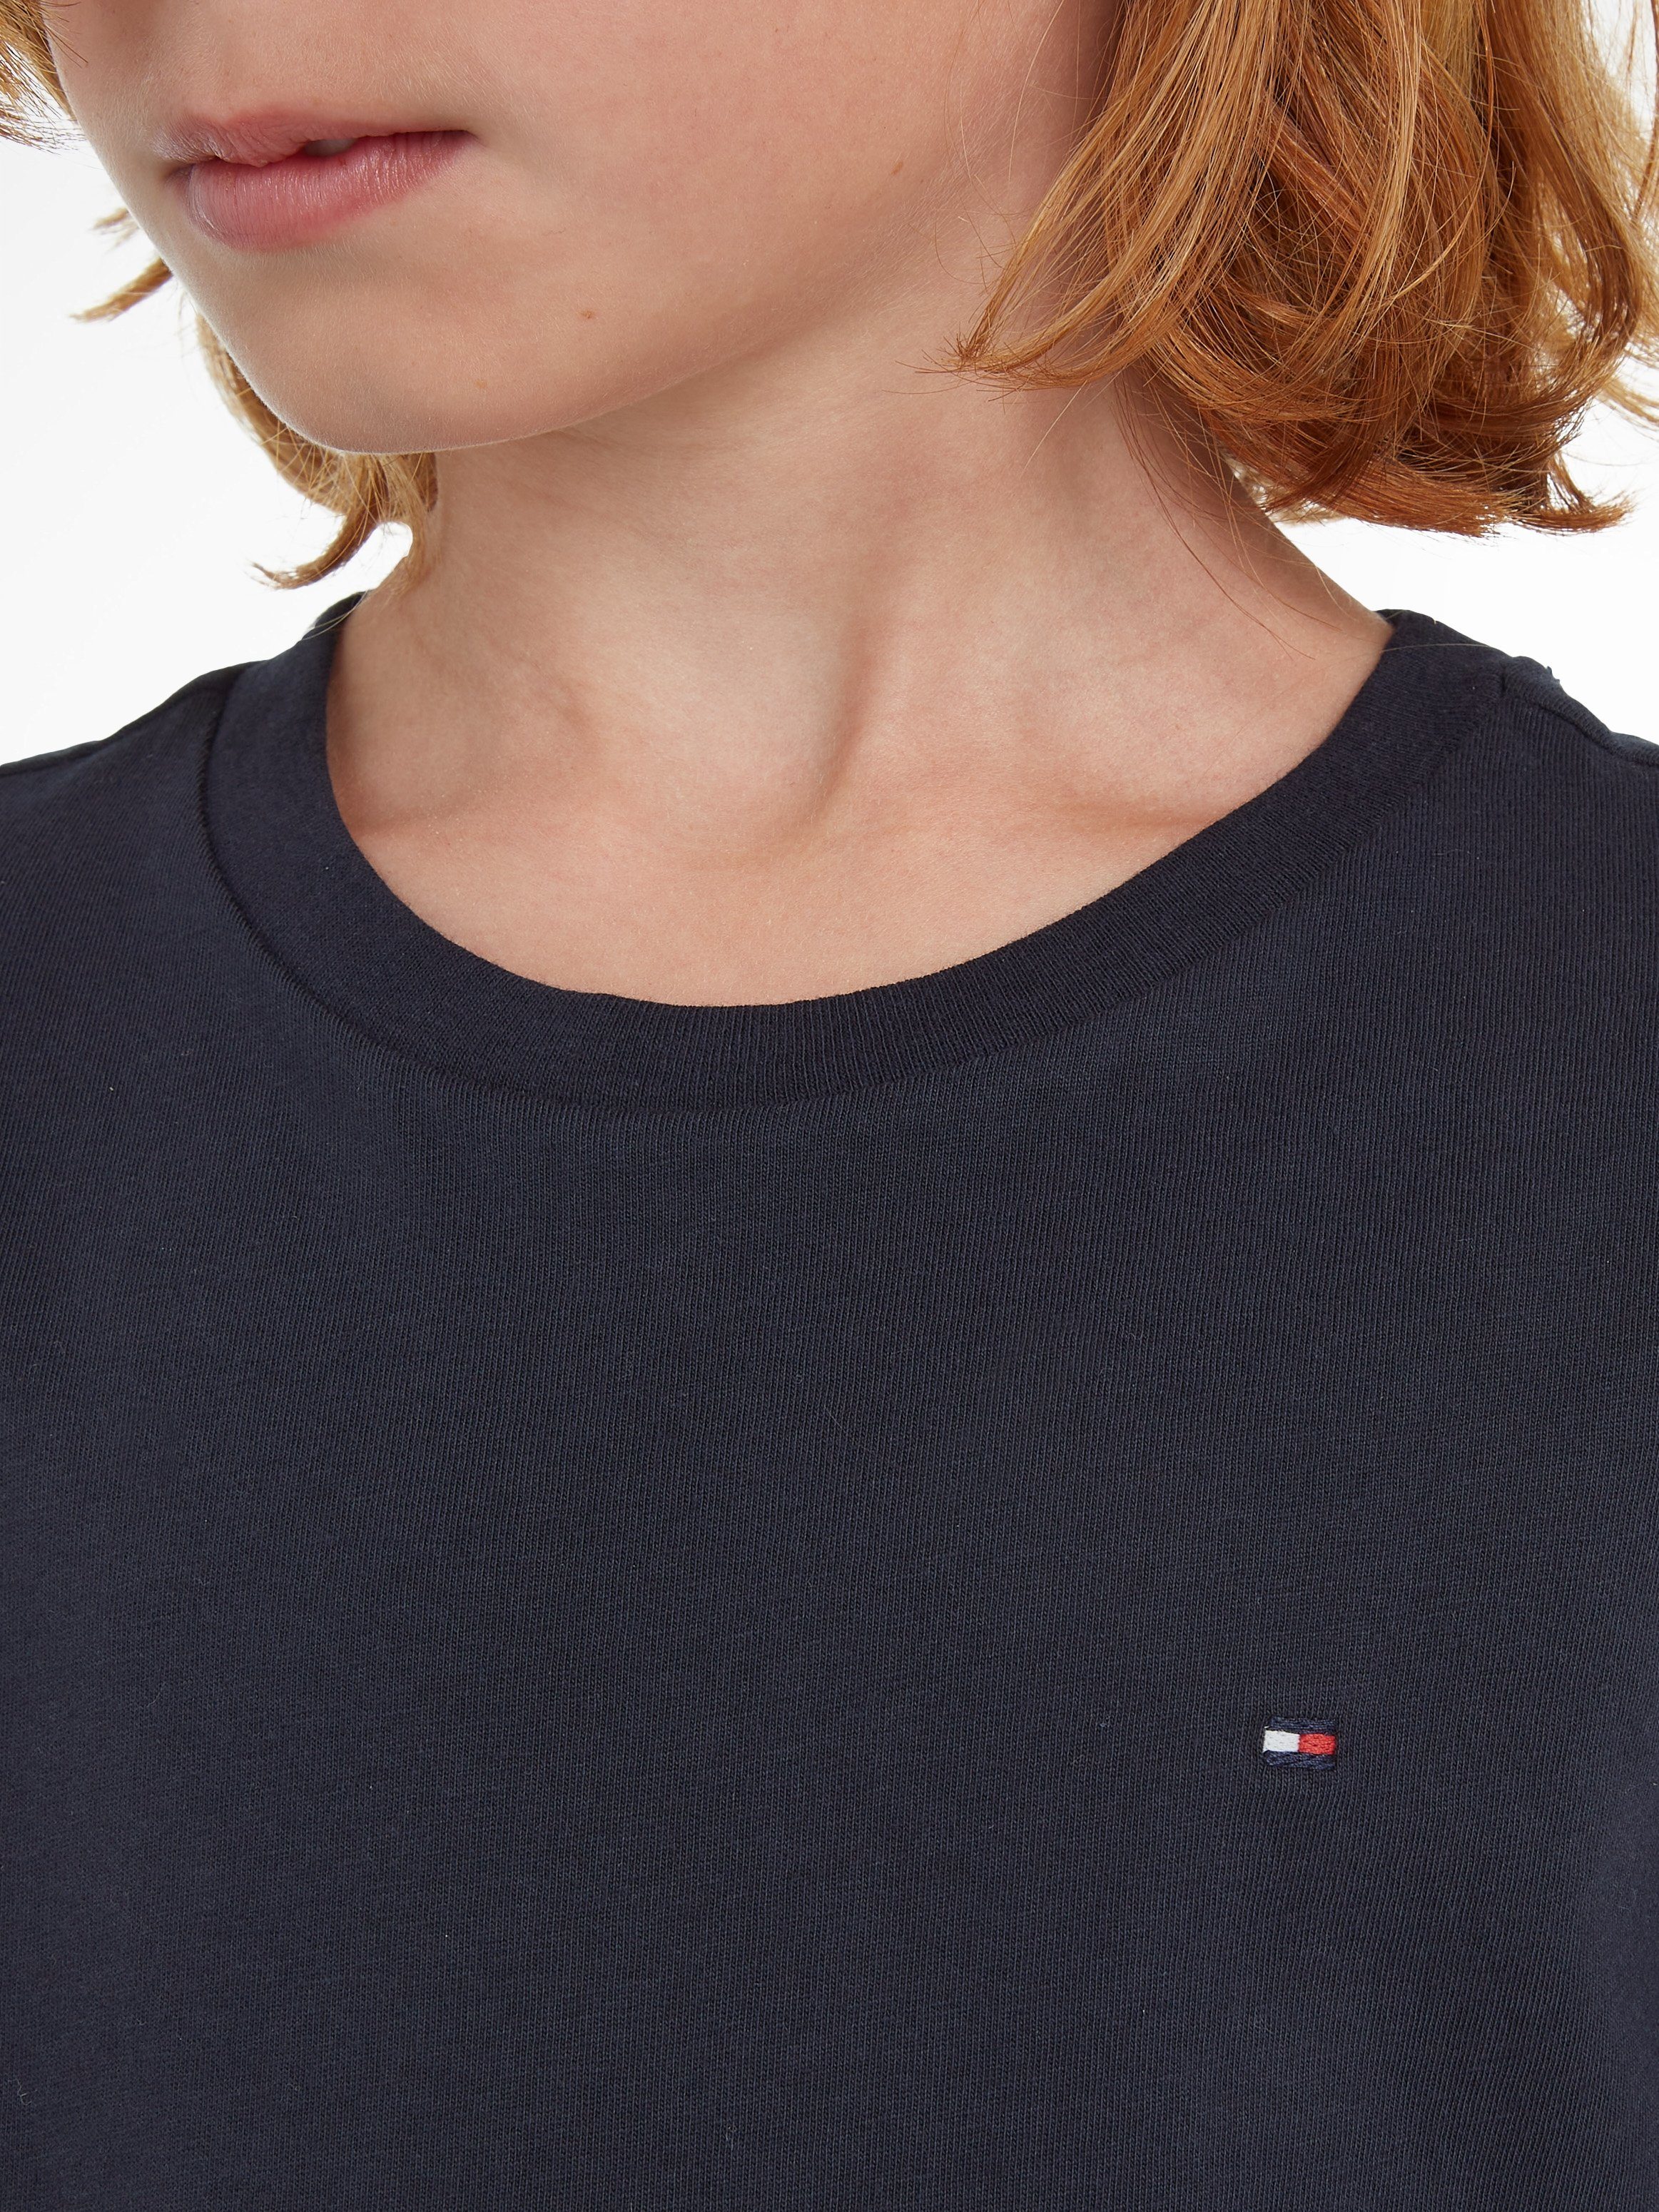 Kinder T-Shirt MiniMe,für BOYS KNIT Hilfiger CN Jungen BASIC Junior Kids Tommy